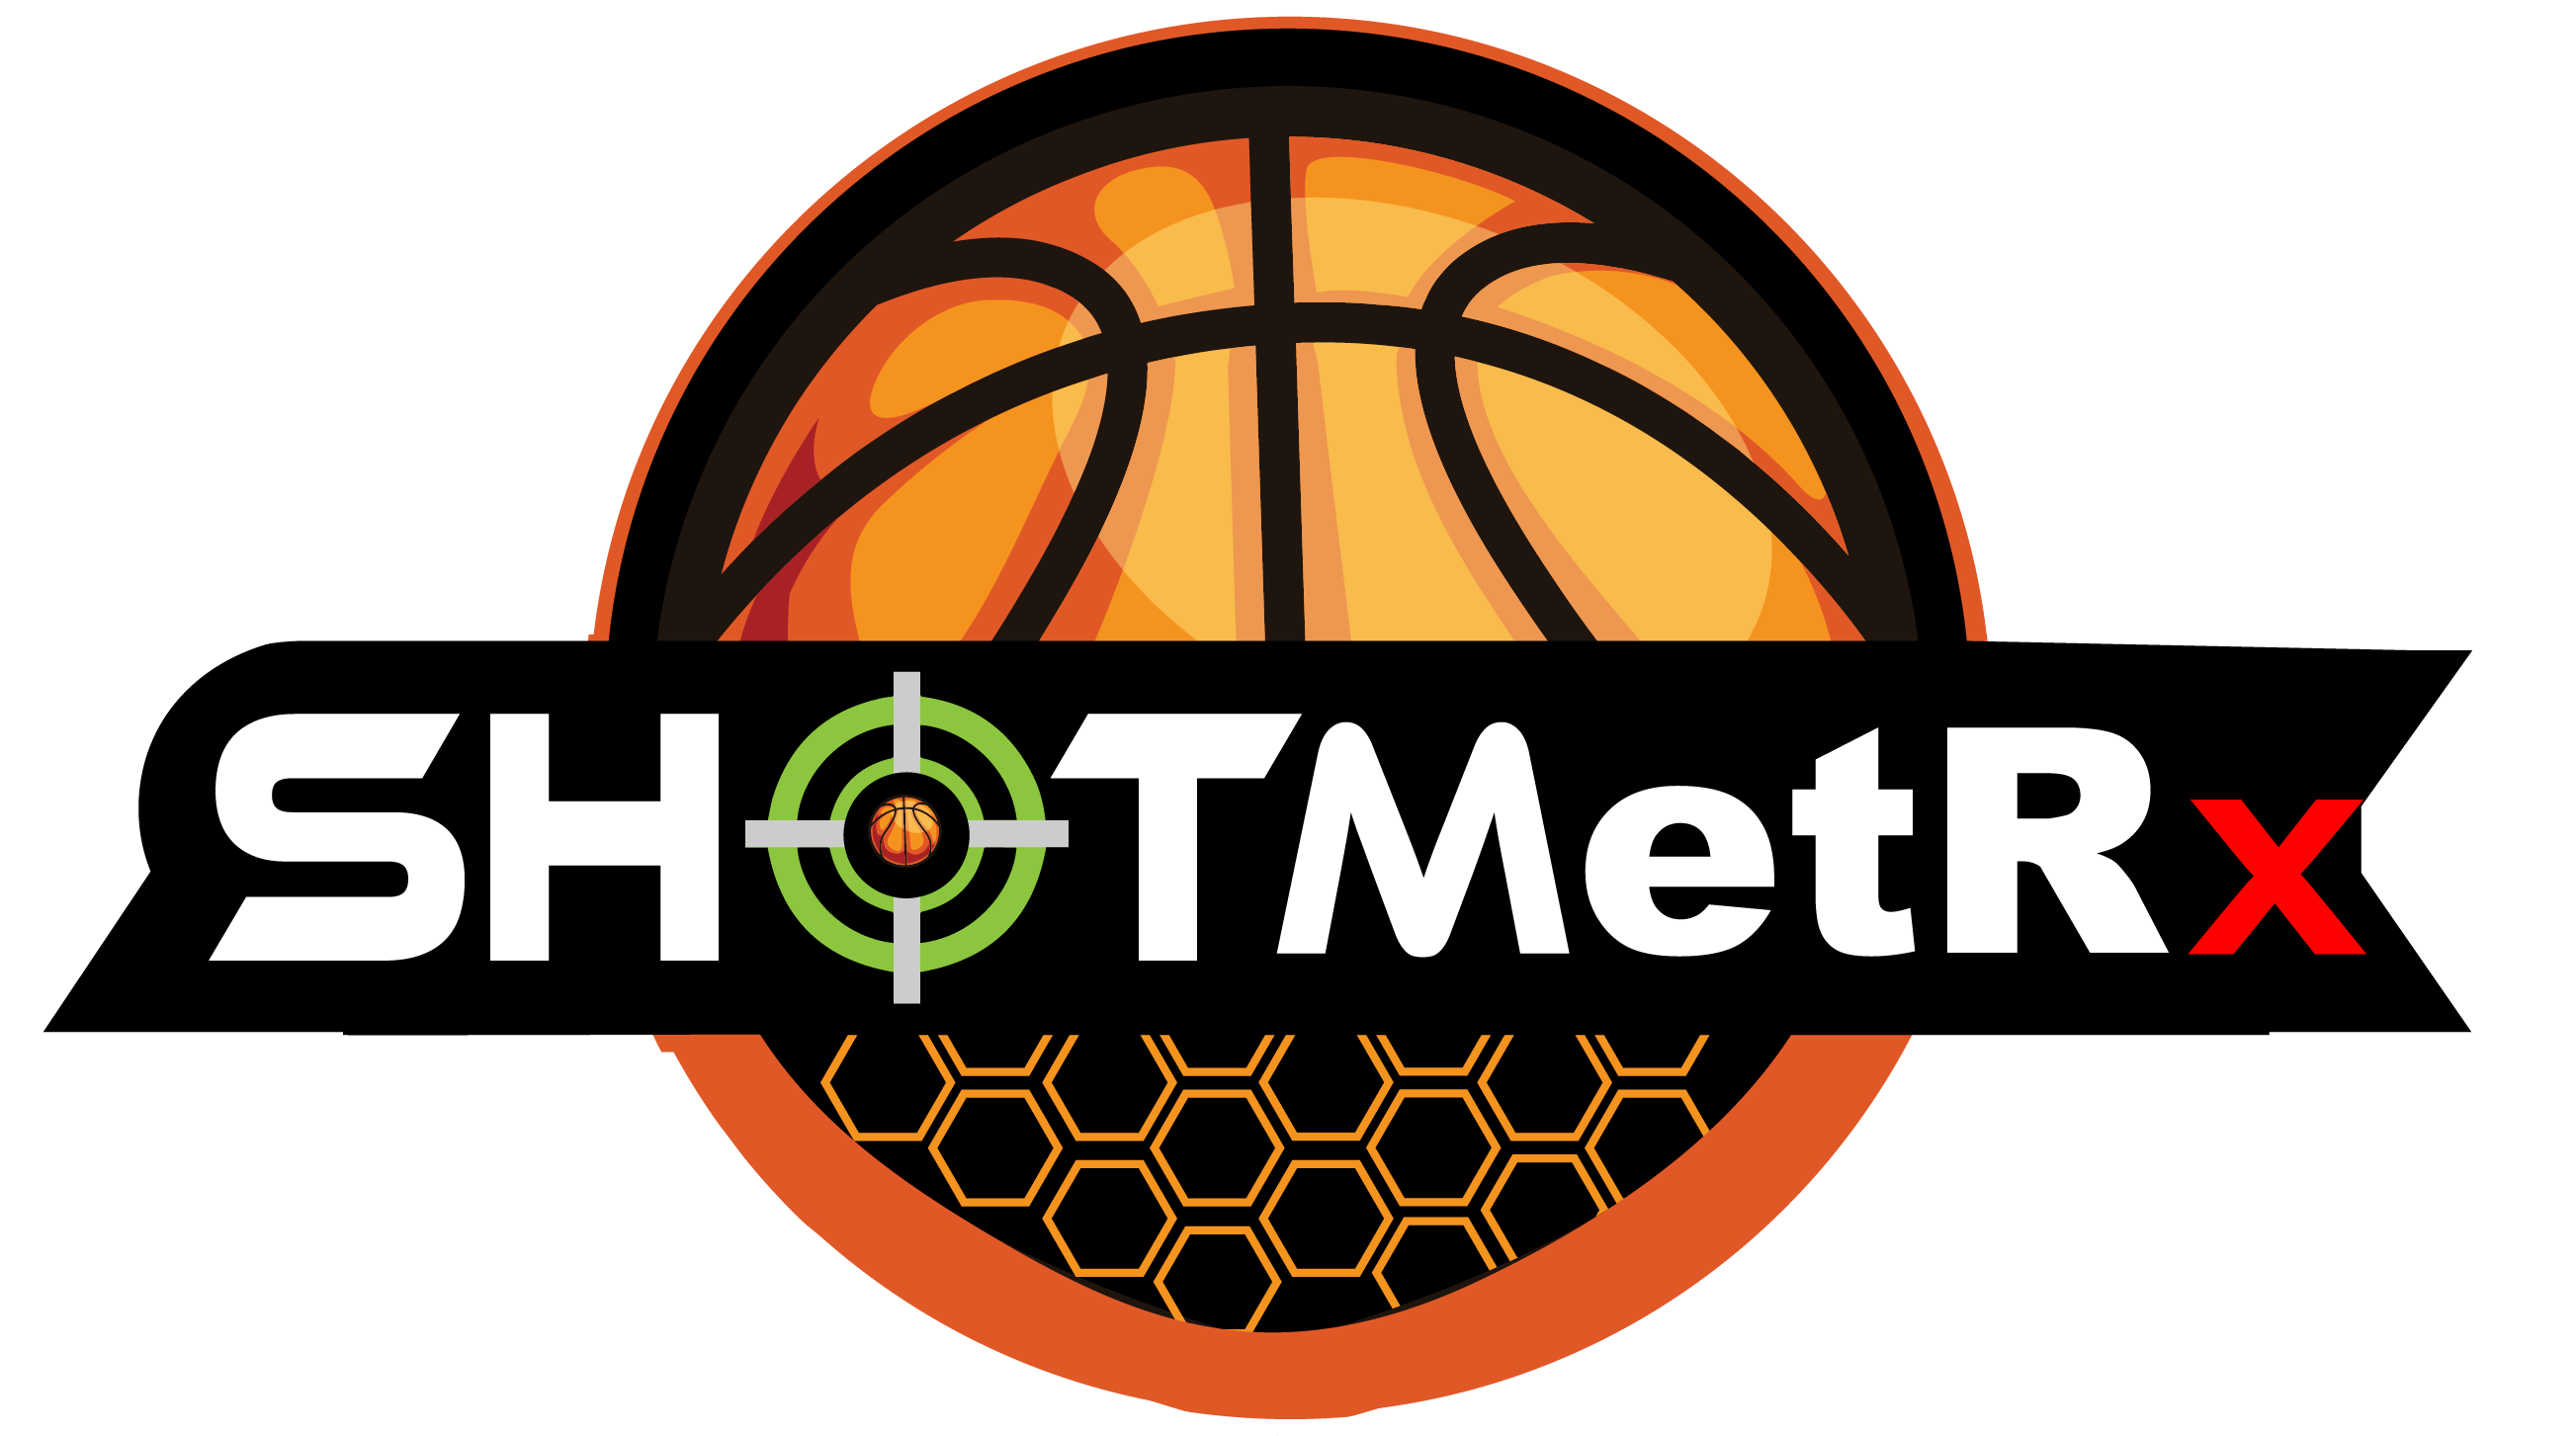 ShotMetRx logo